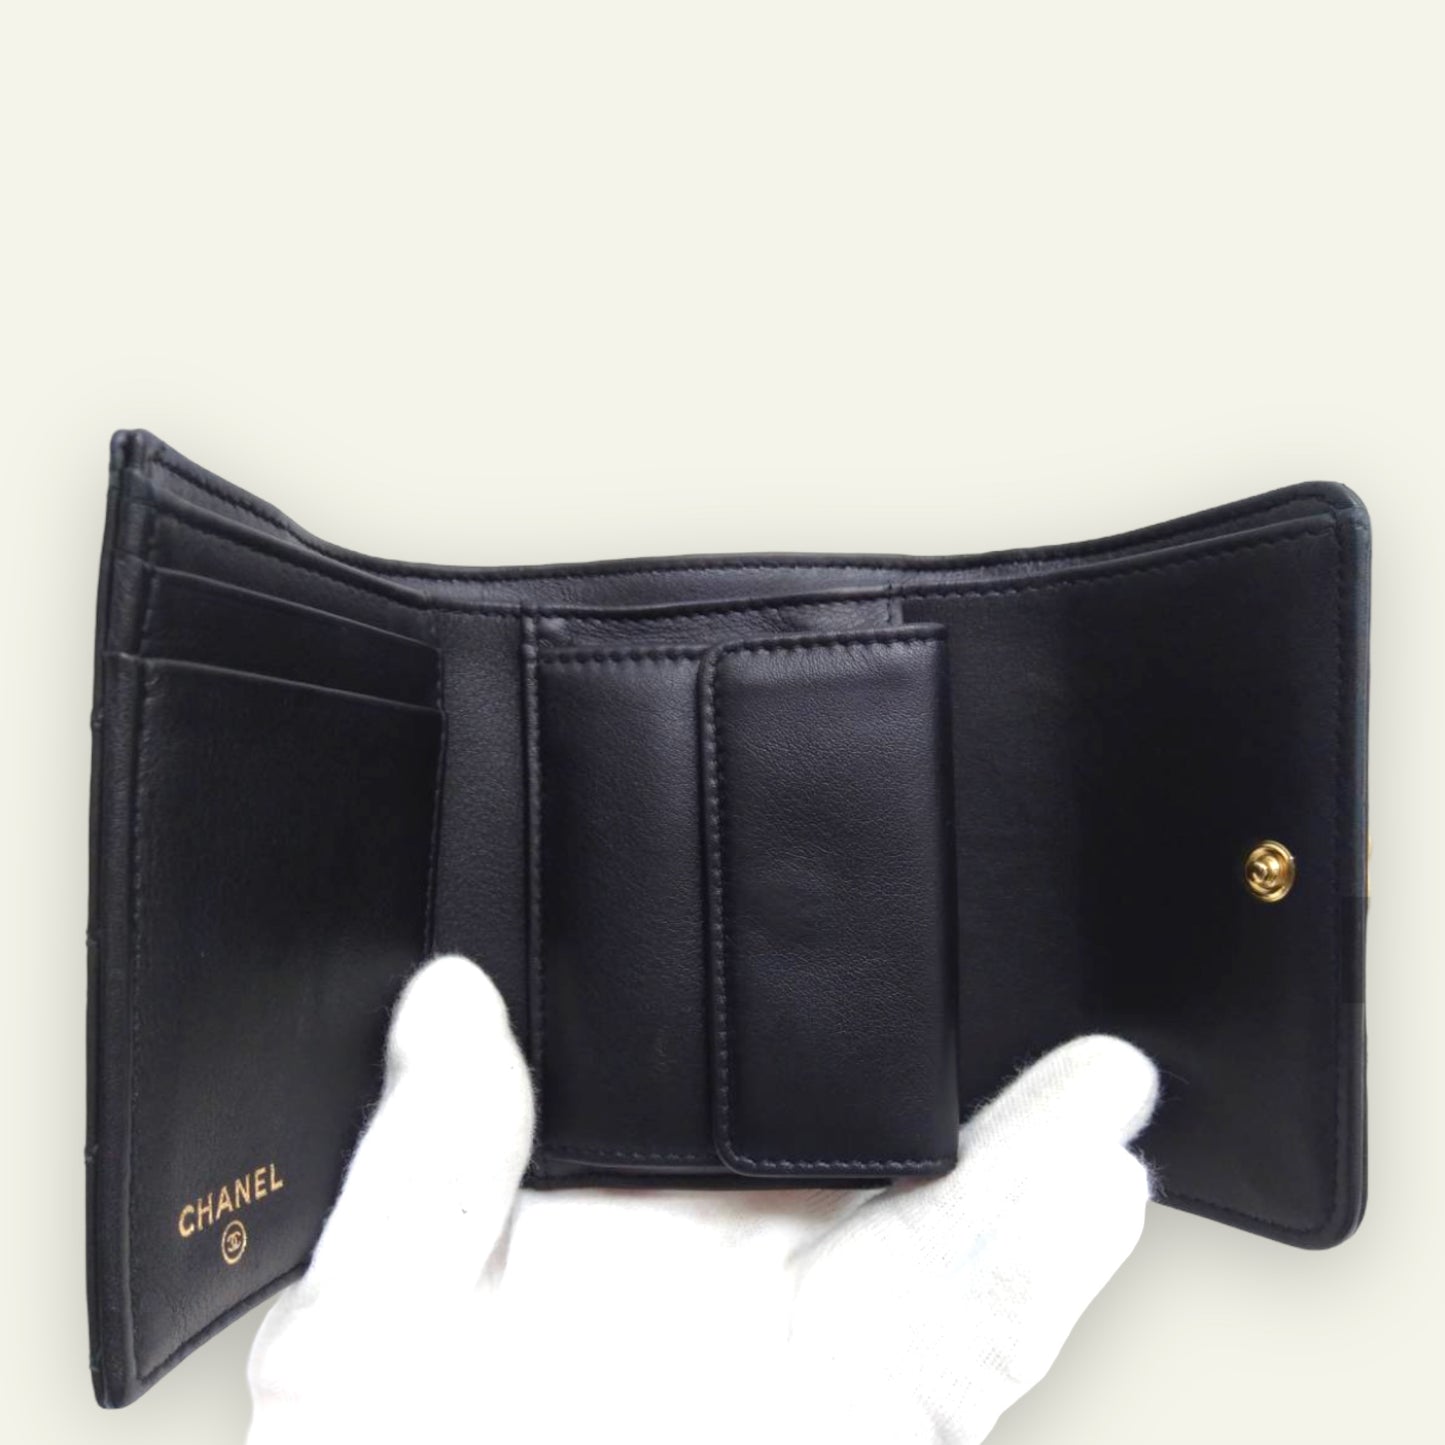 Chanel Boy Compact Wallet